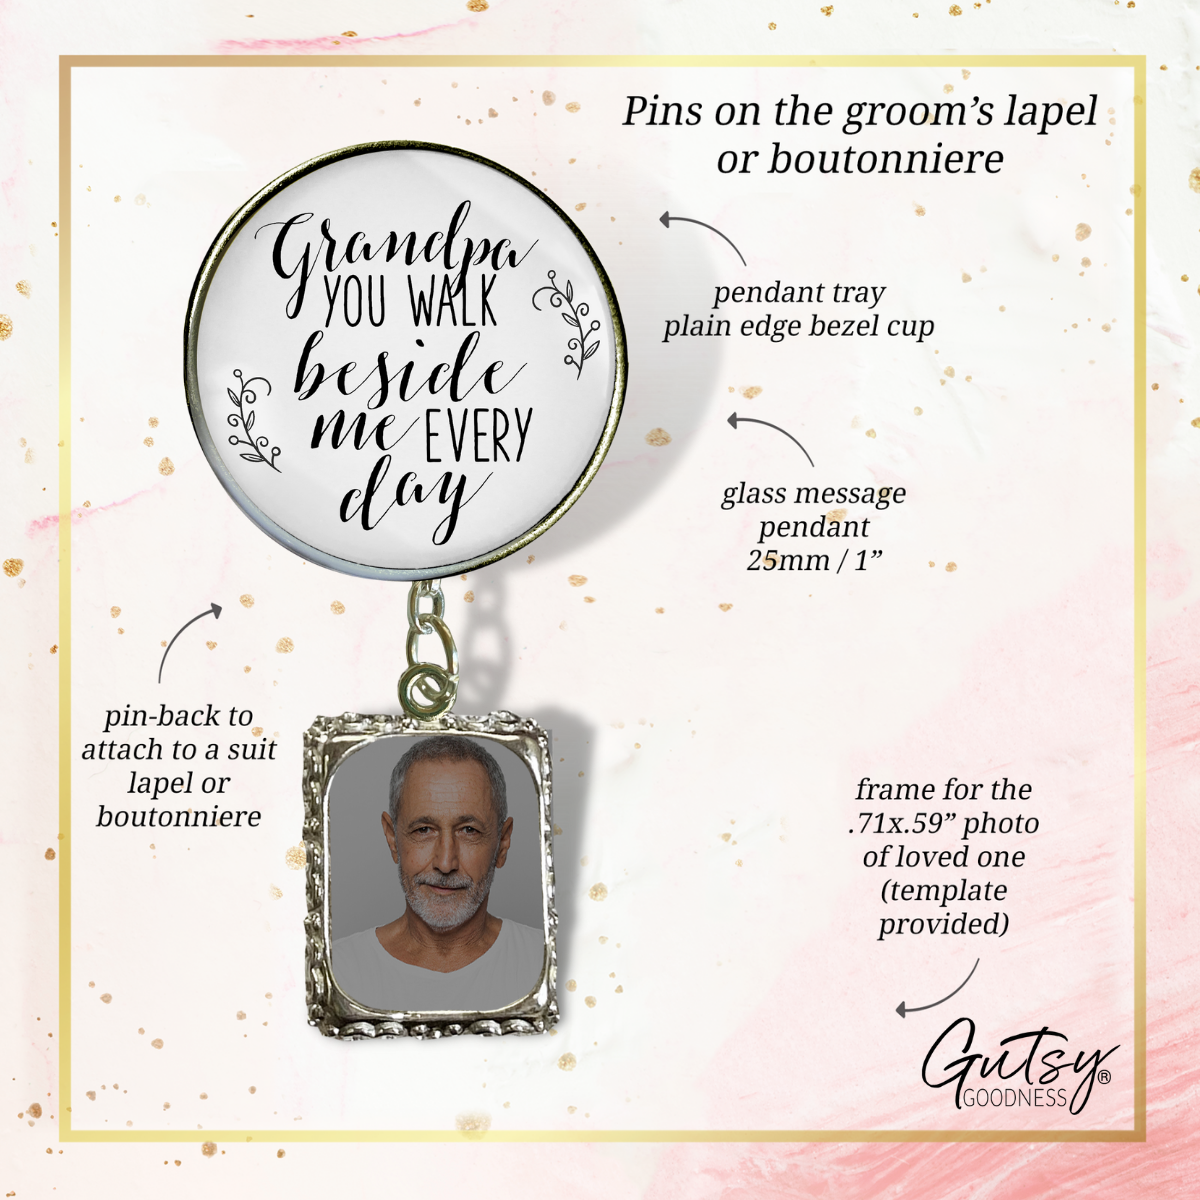 Wedding Memorial Boutonniere Pin Photo Frame Honor Grandpa Silver White For Men - Gutsy Goodness